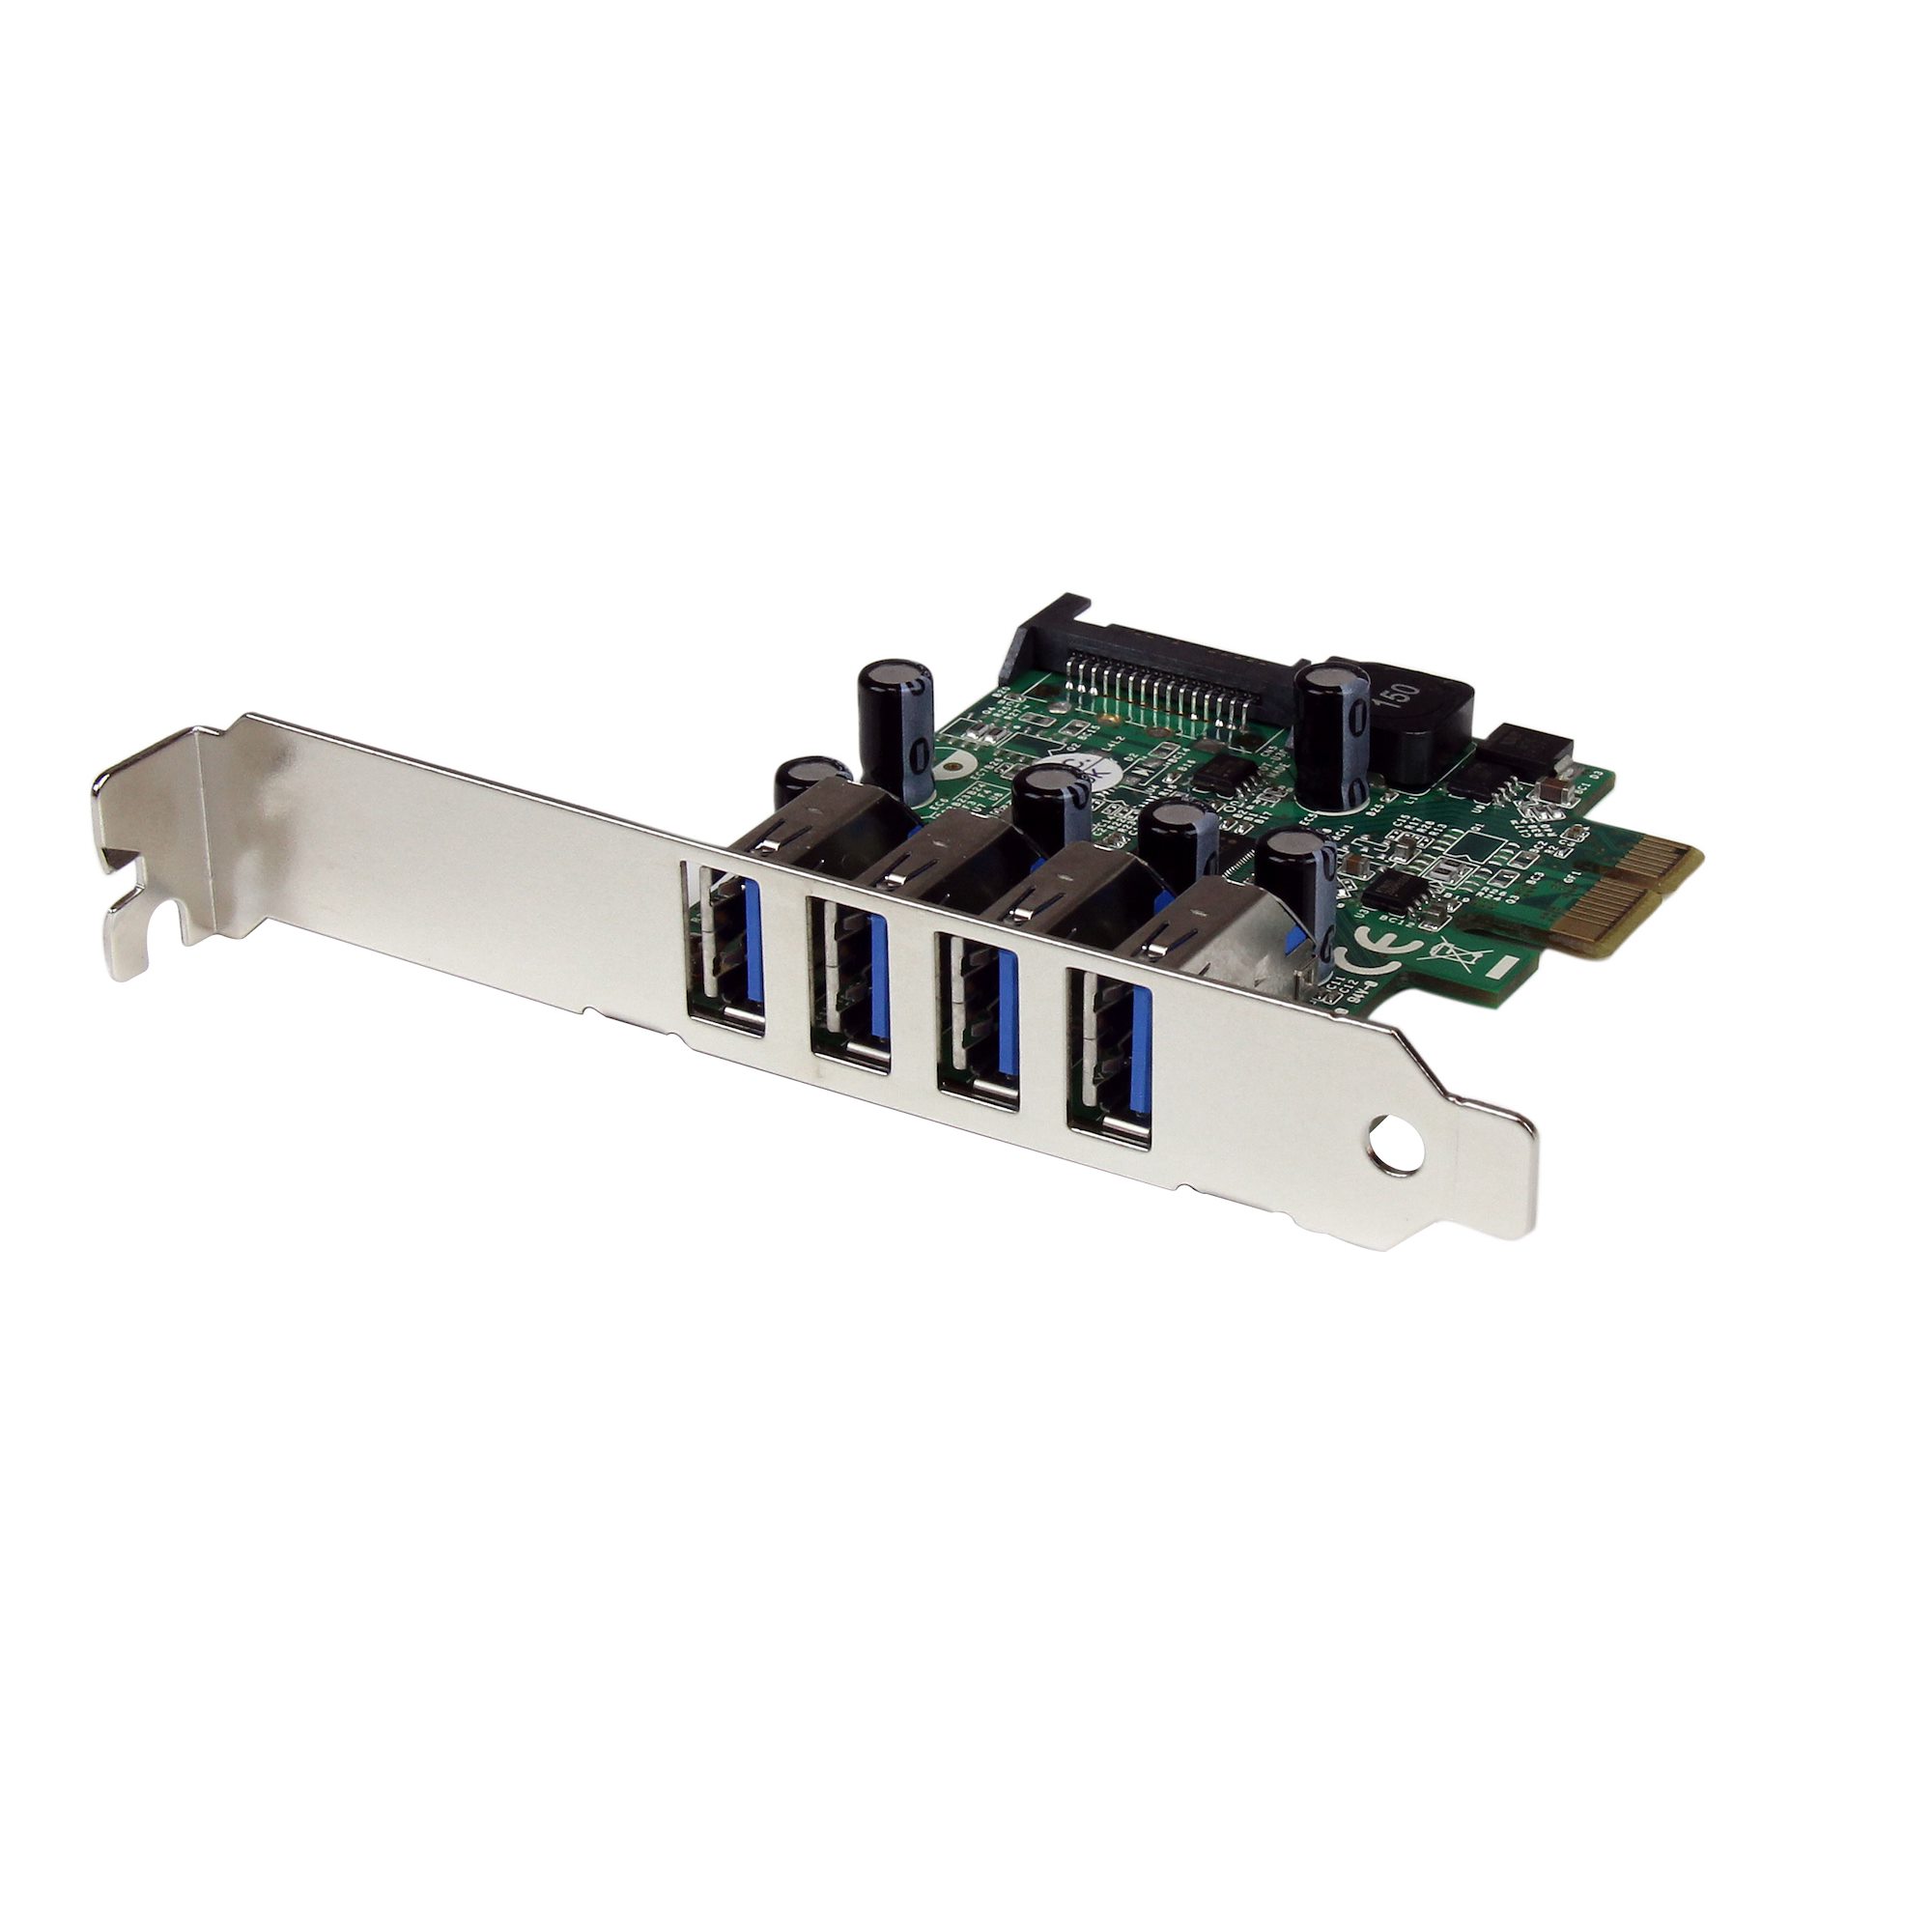 klæde sig ud Glow september 4 Port PCI Express PCIe USB 3.0 Card - USB 3.0 Cards | StarTech.com